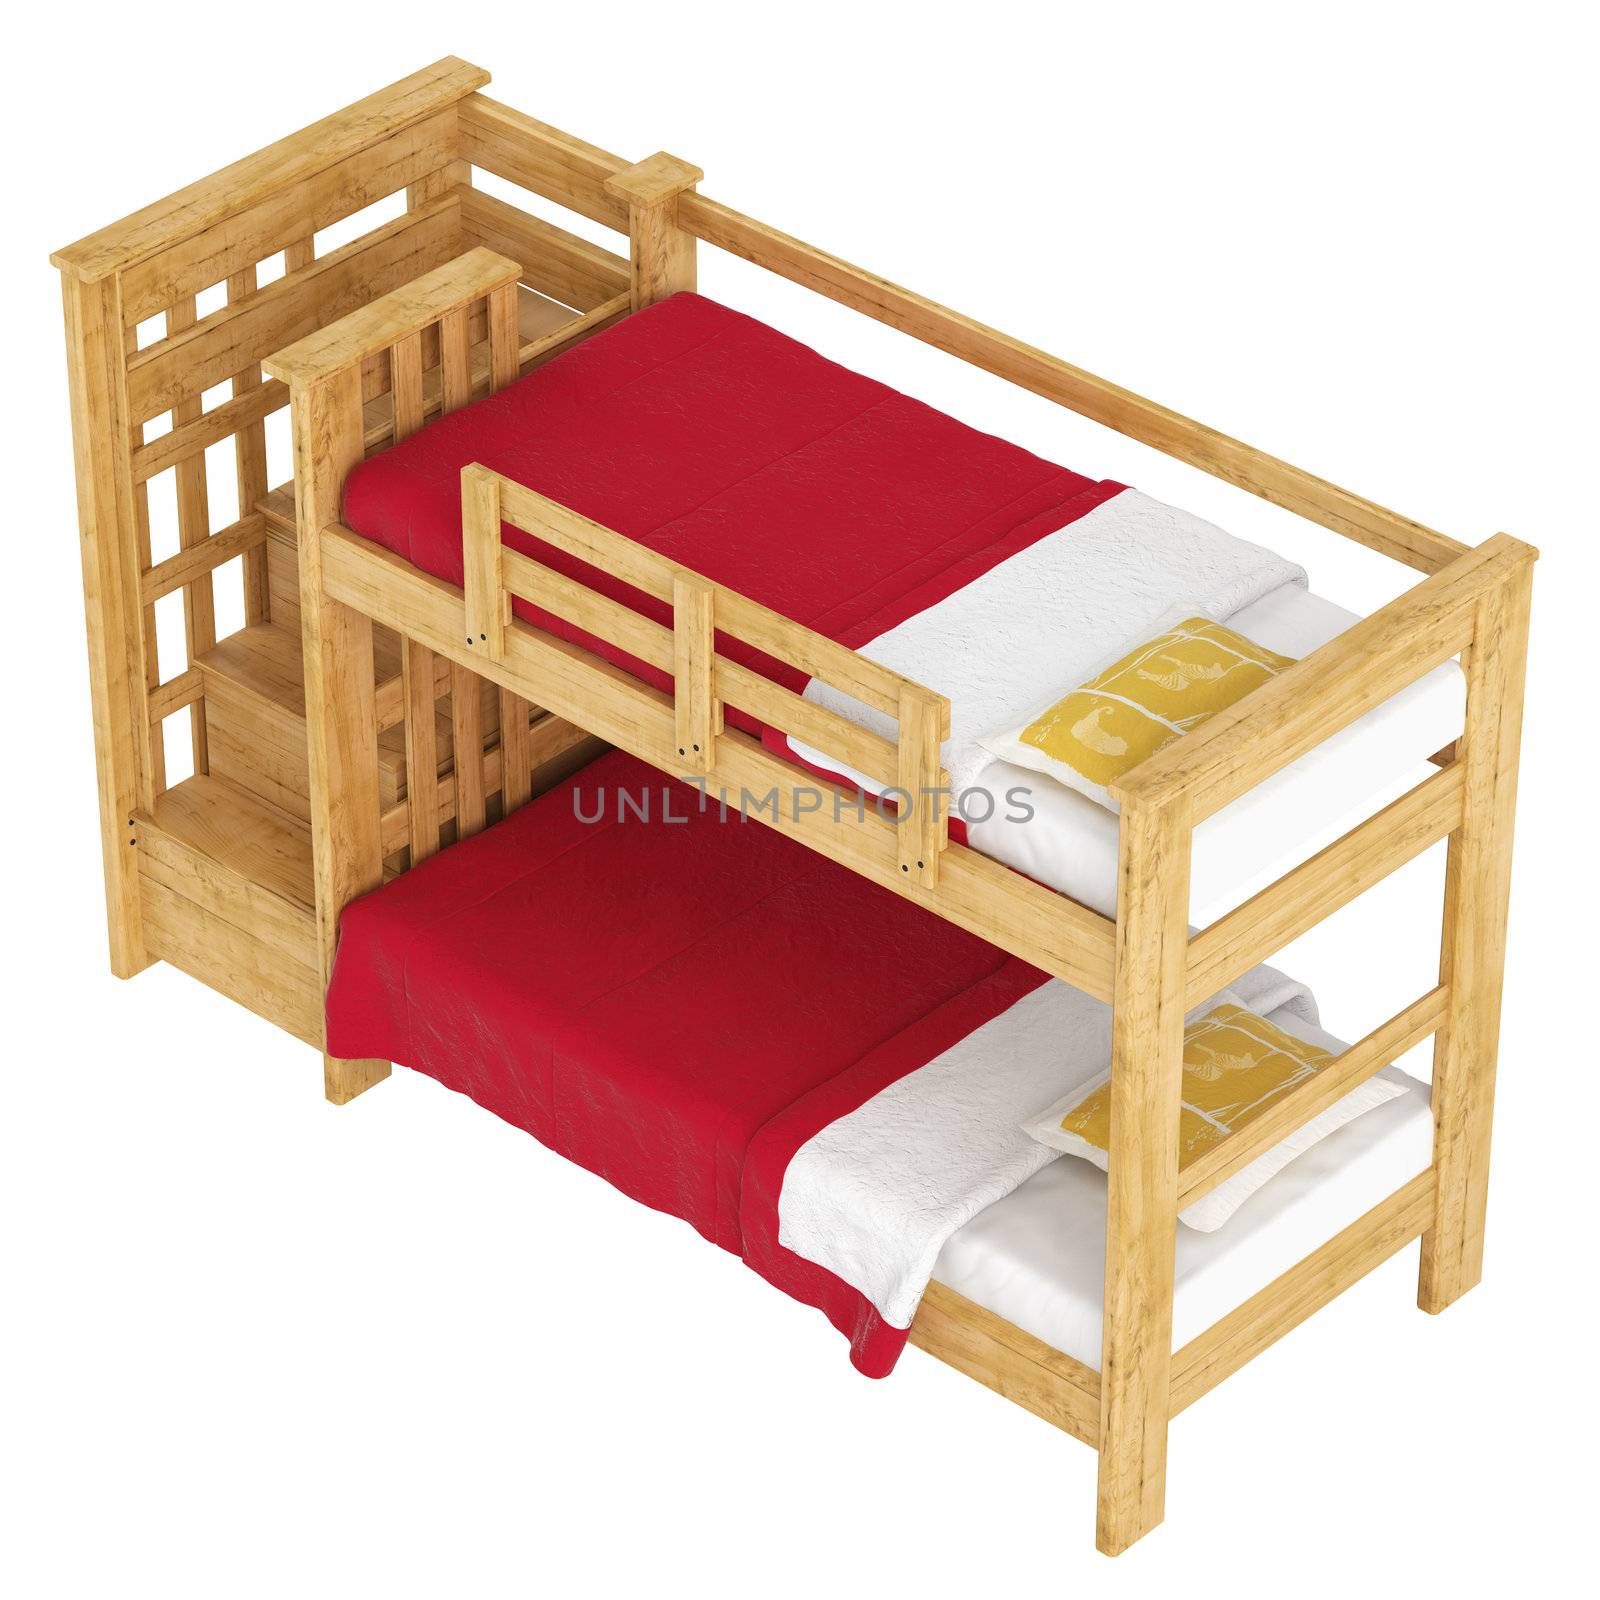 Wooden double bunk bed by AlexanderMorozov